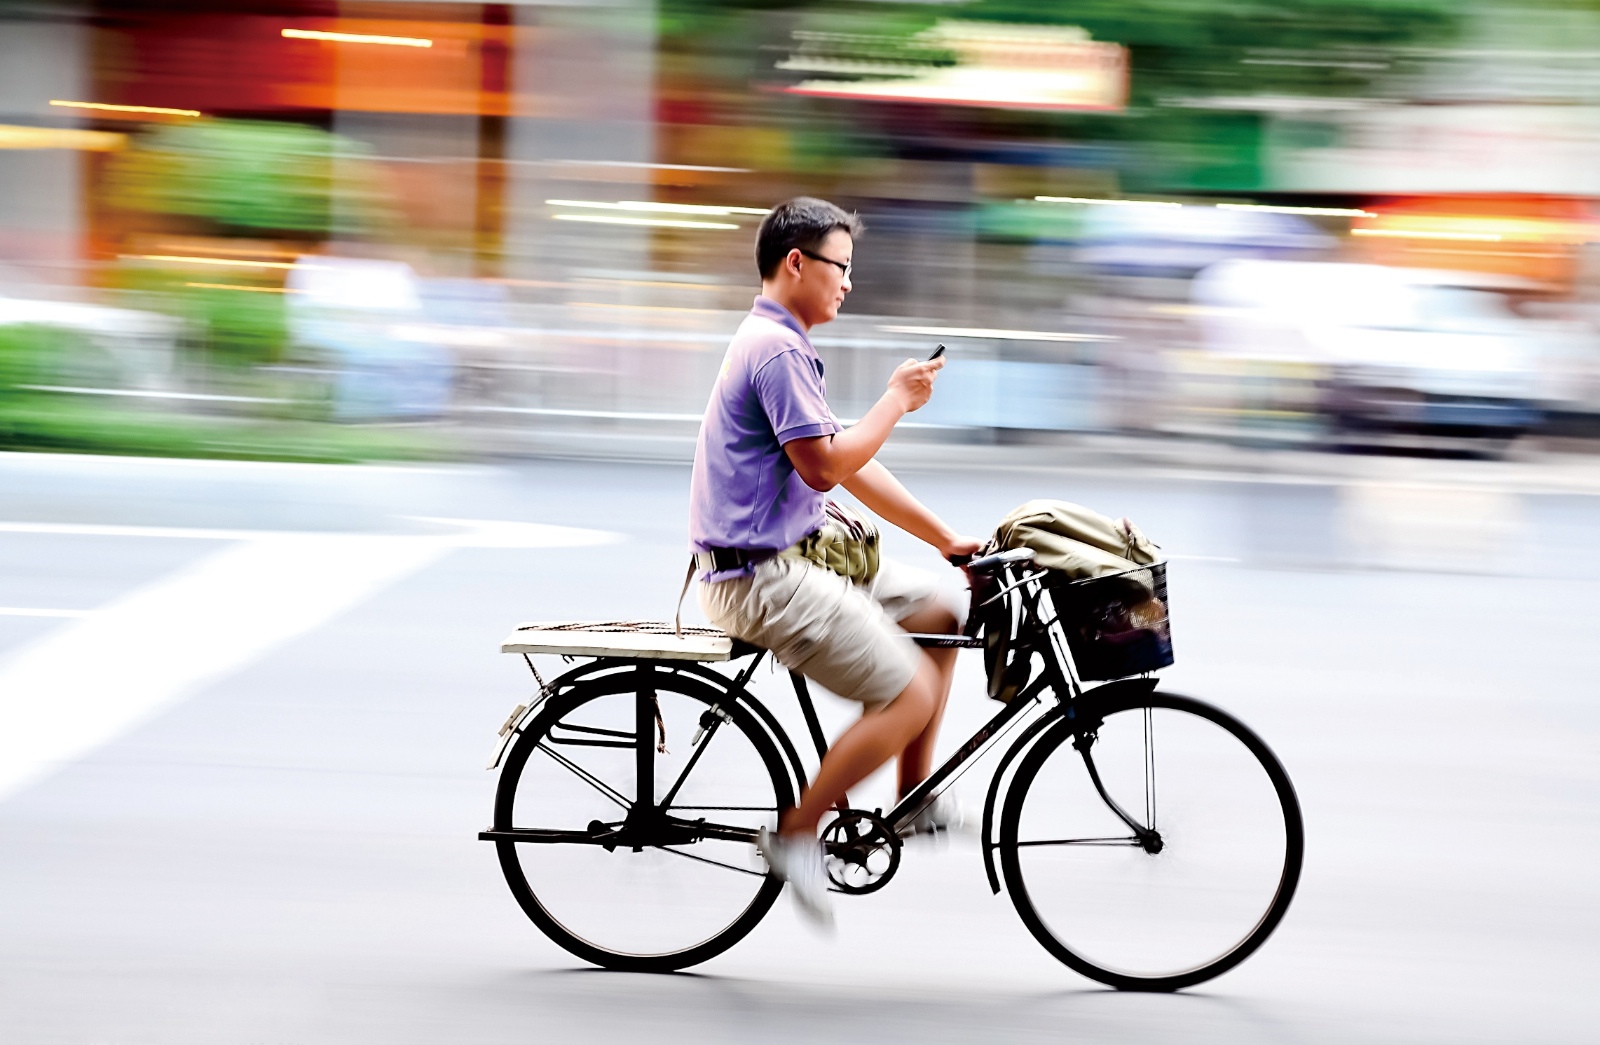 Photo Essay: Panning Guangzhou's Cyclists